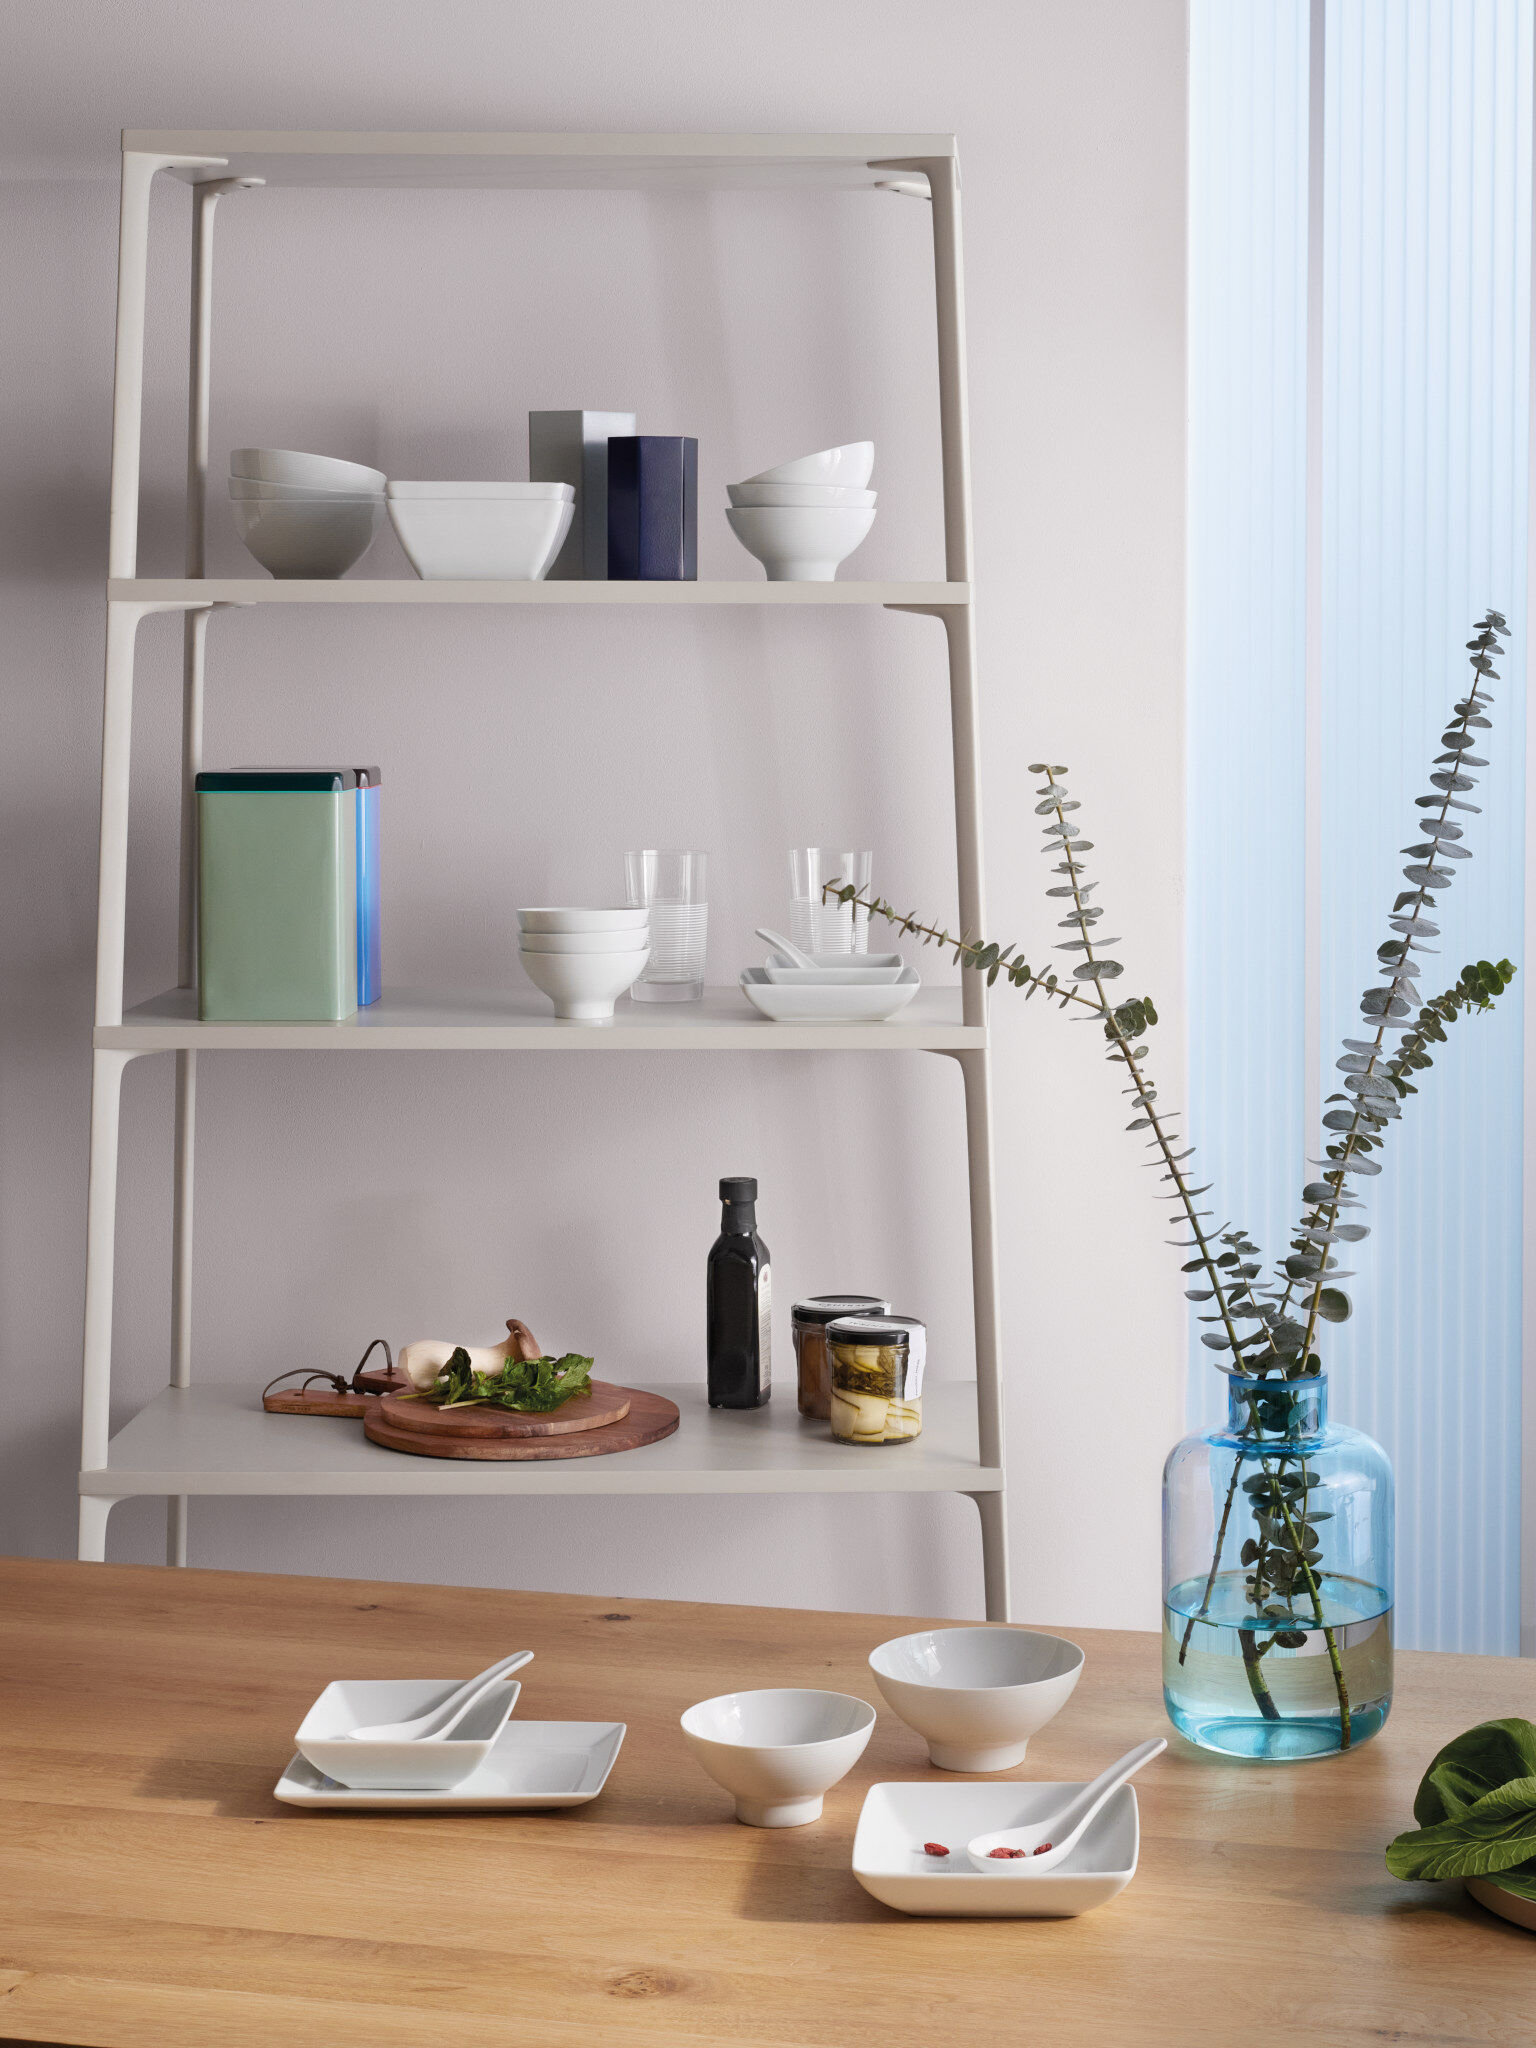 Thomas Loft White items arranged in a shelf